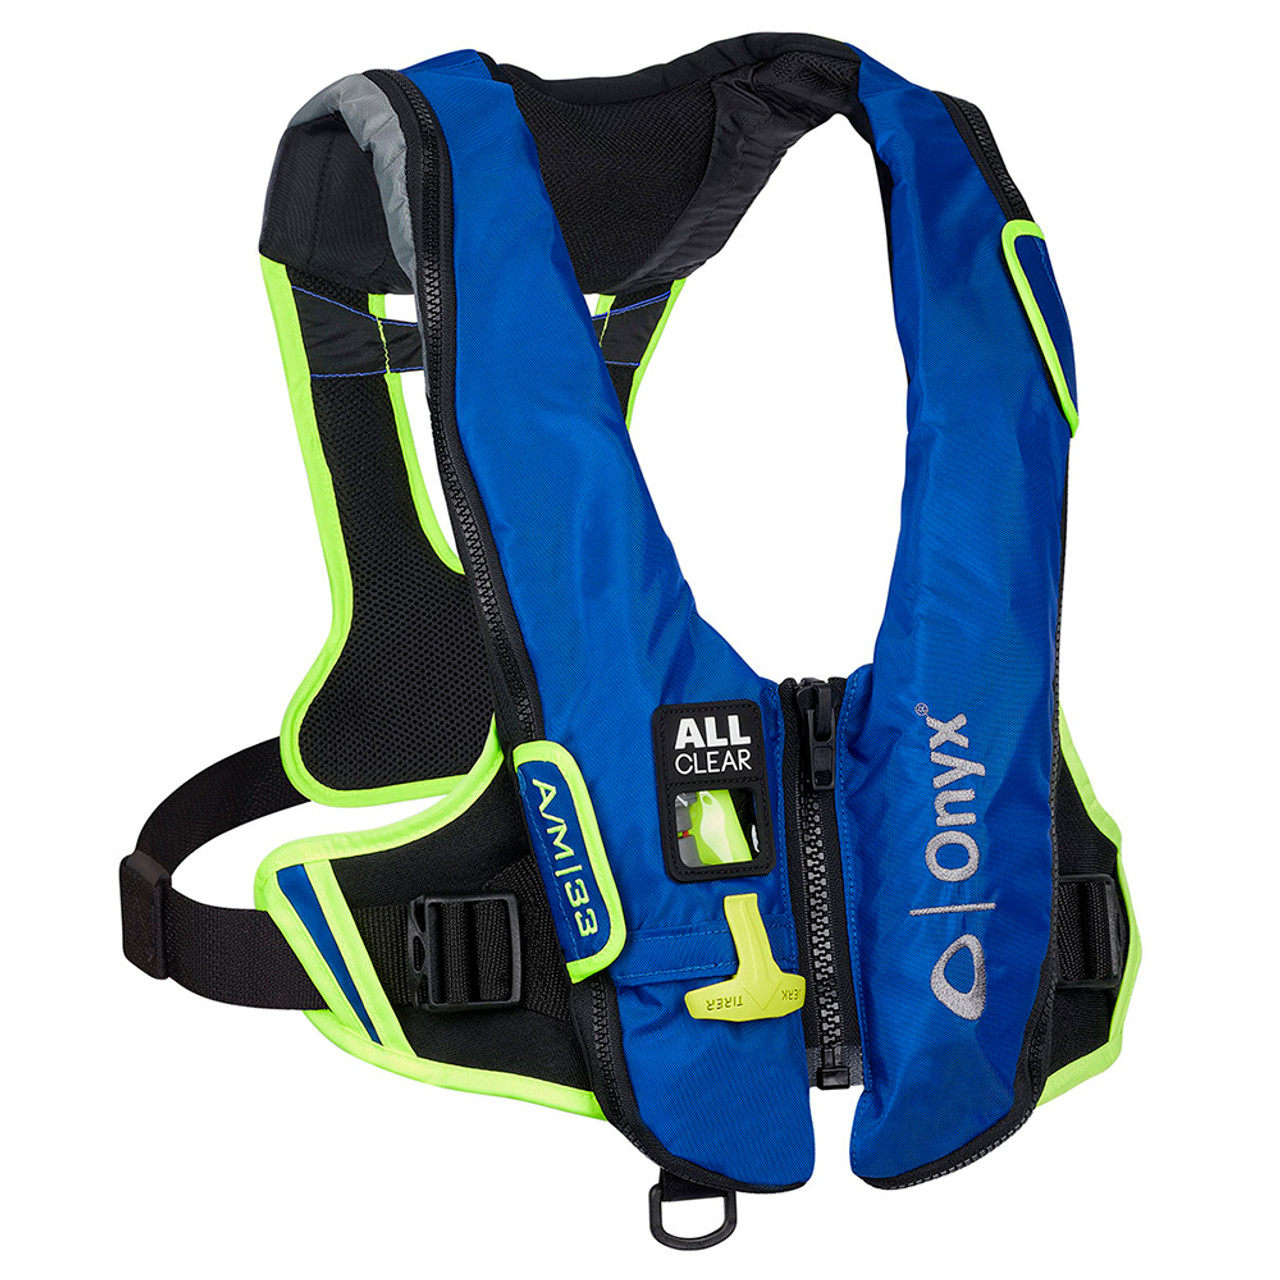 Onyx Impulse A/-24 All Clear Auto/Manual Inflatable Life Jacket - Blue